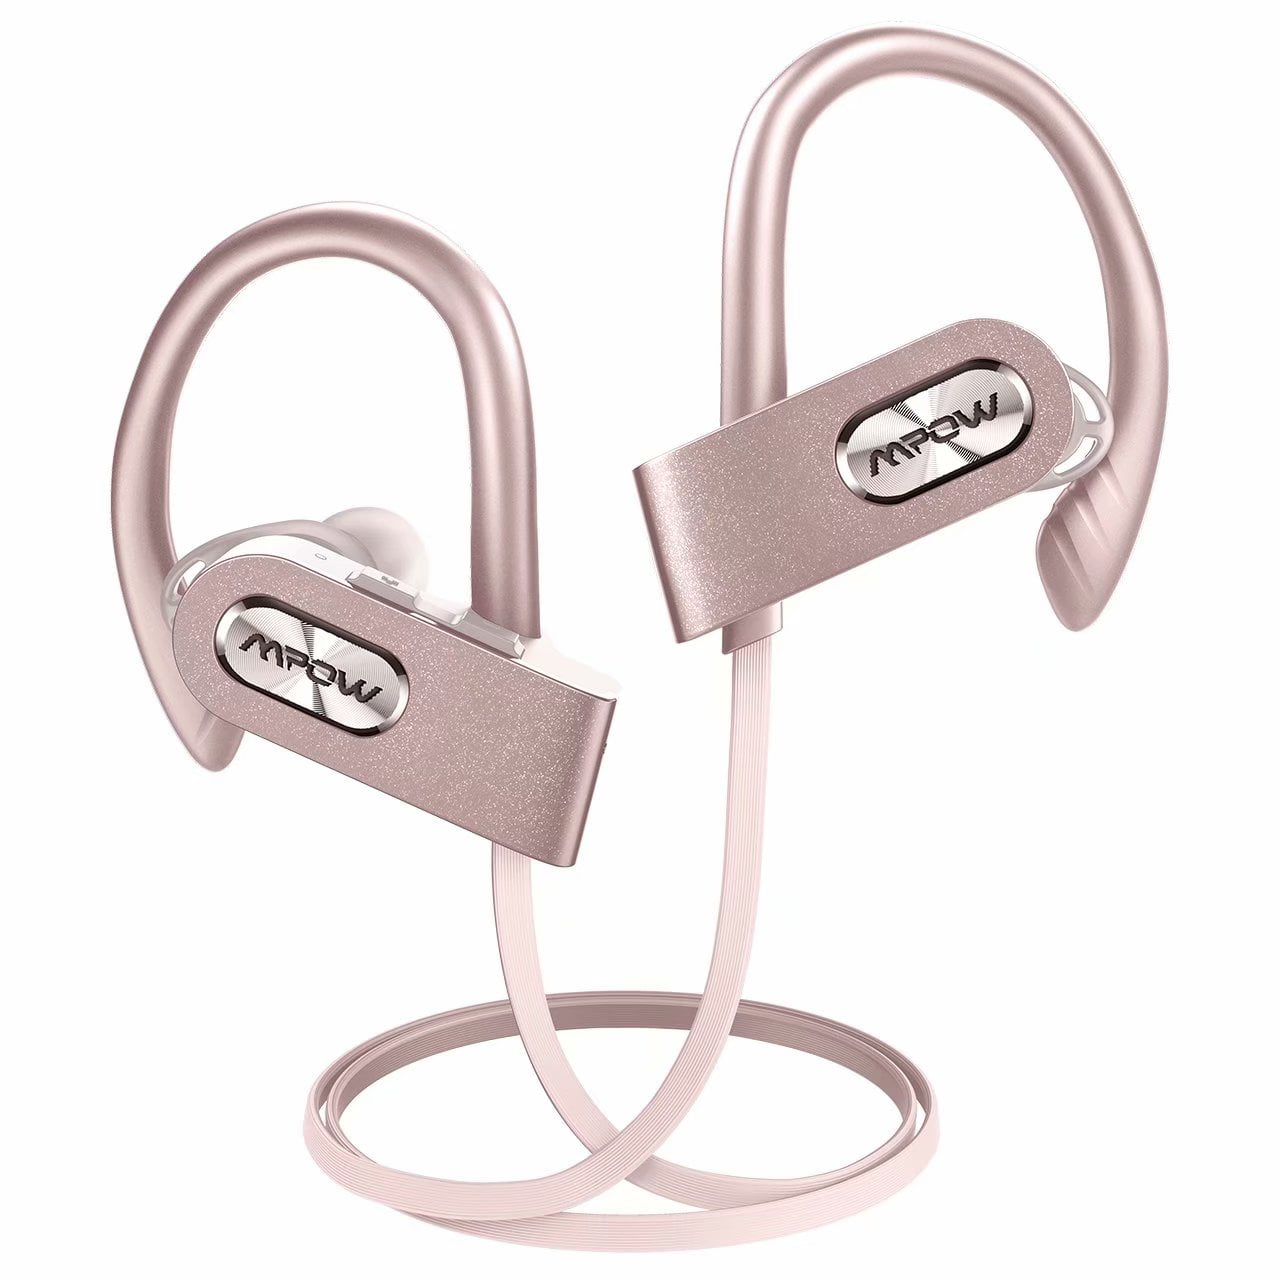 Mpow Flame2 Bluetooth Headphones 13-Hr Playtime, Bluetooth 5.0 Wireless Earbuds, IPX7 Waterproof Wireless Sport Earphones w/CVC 6.0 Noise Cancelling Mic, Ergonomic Ear Hooks for Running Workout, Pink